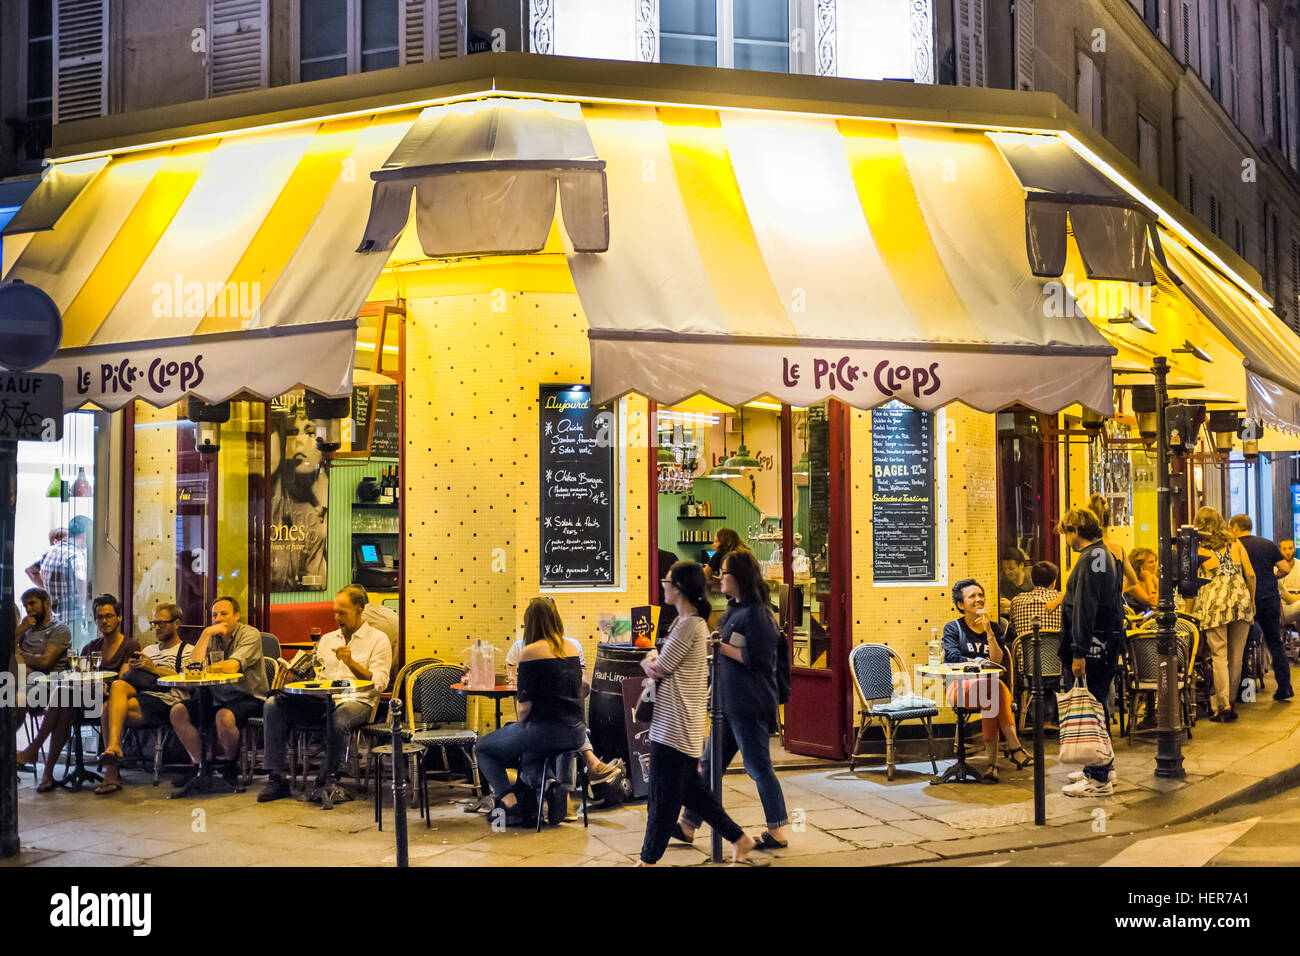 le pick-clops, cafe, brasserie at night Stock Photo - Alamy